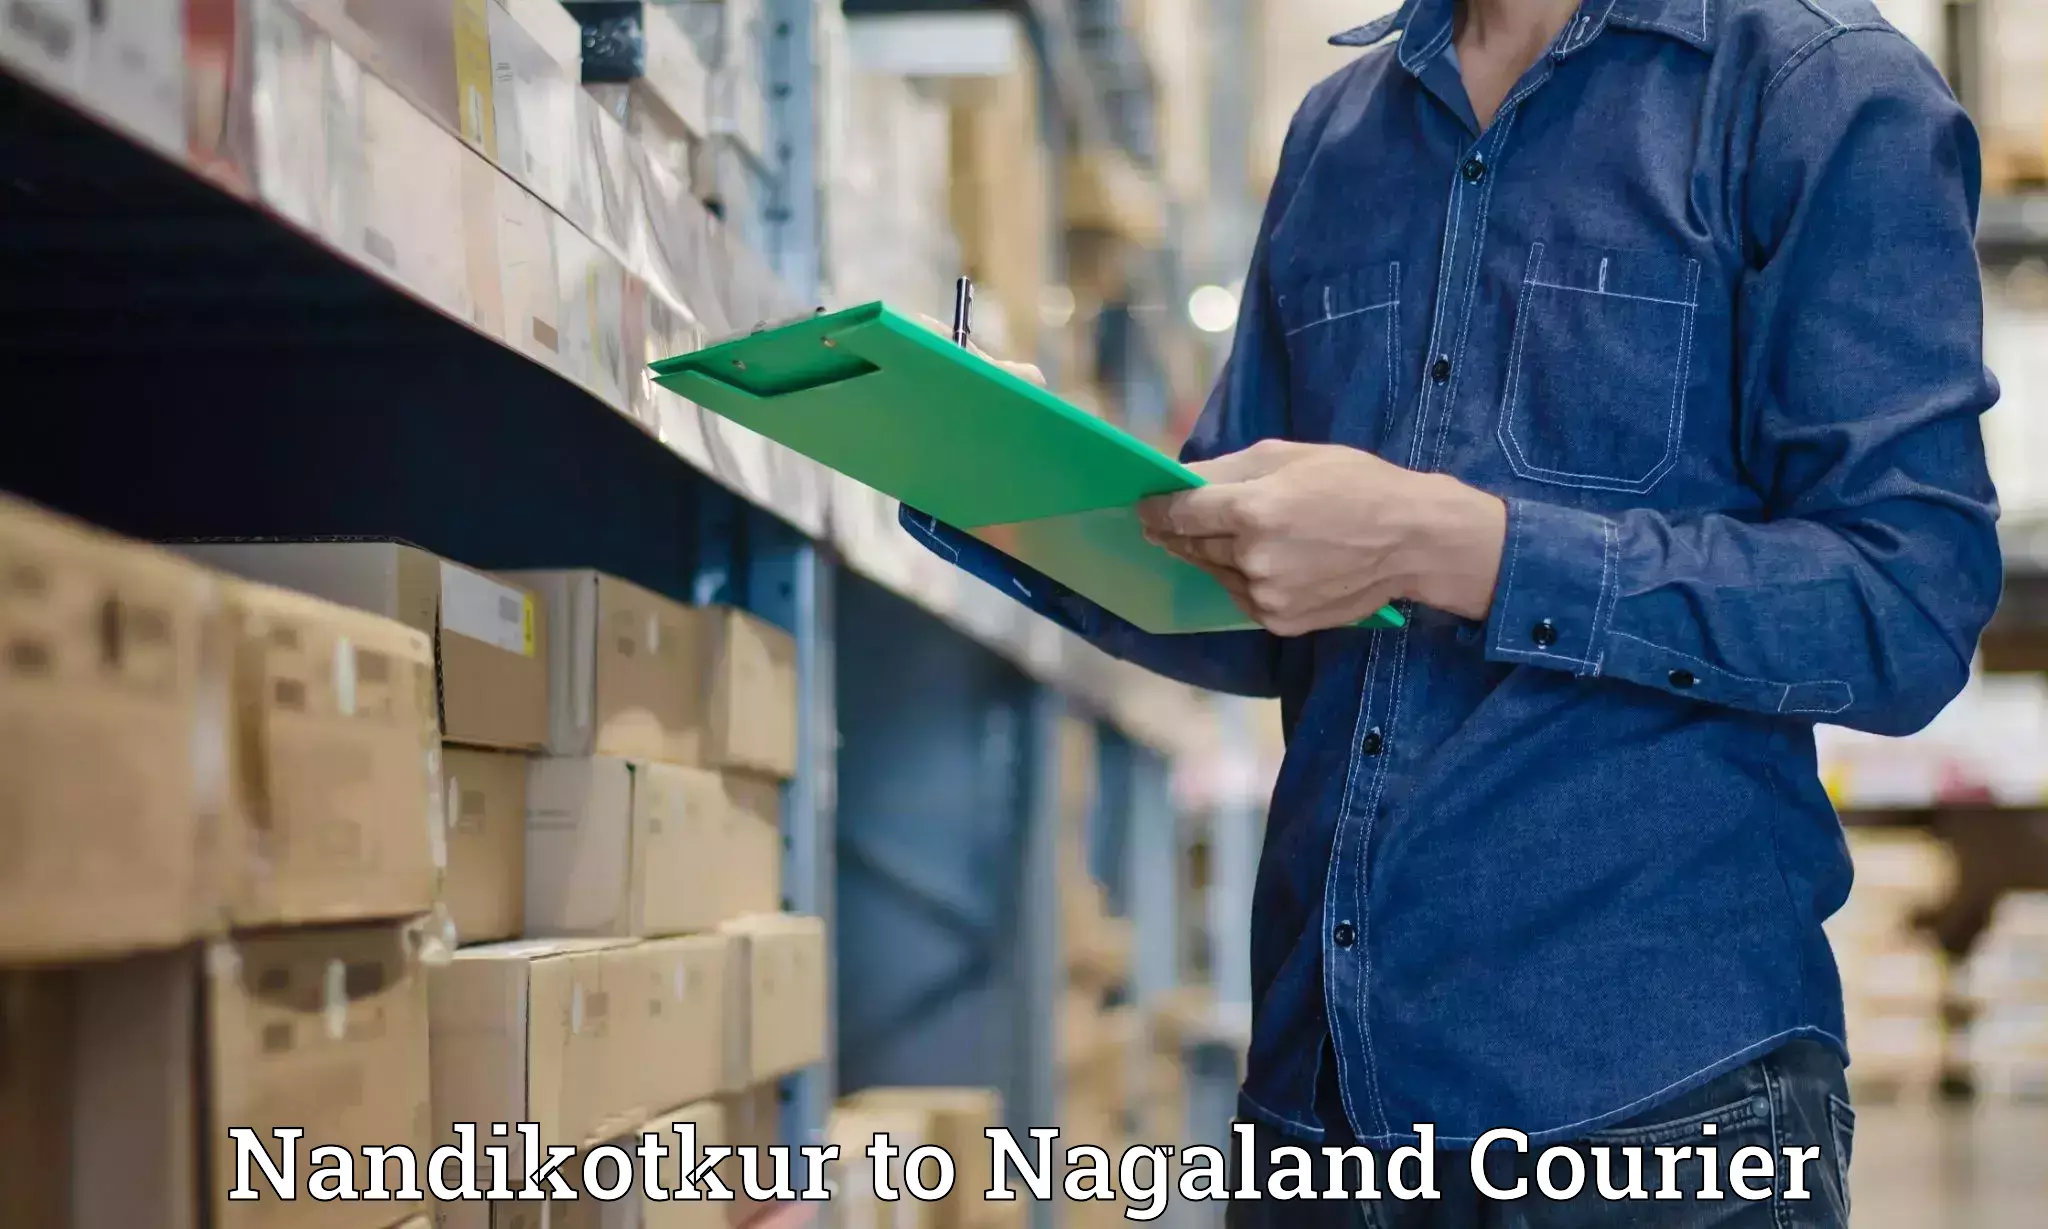 Reliable logistics providers Nandikotkur to Mon